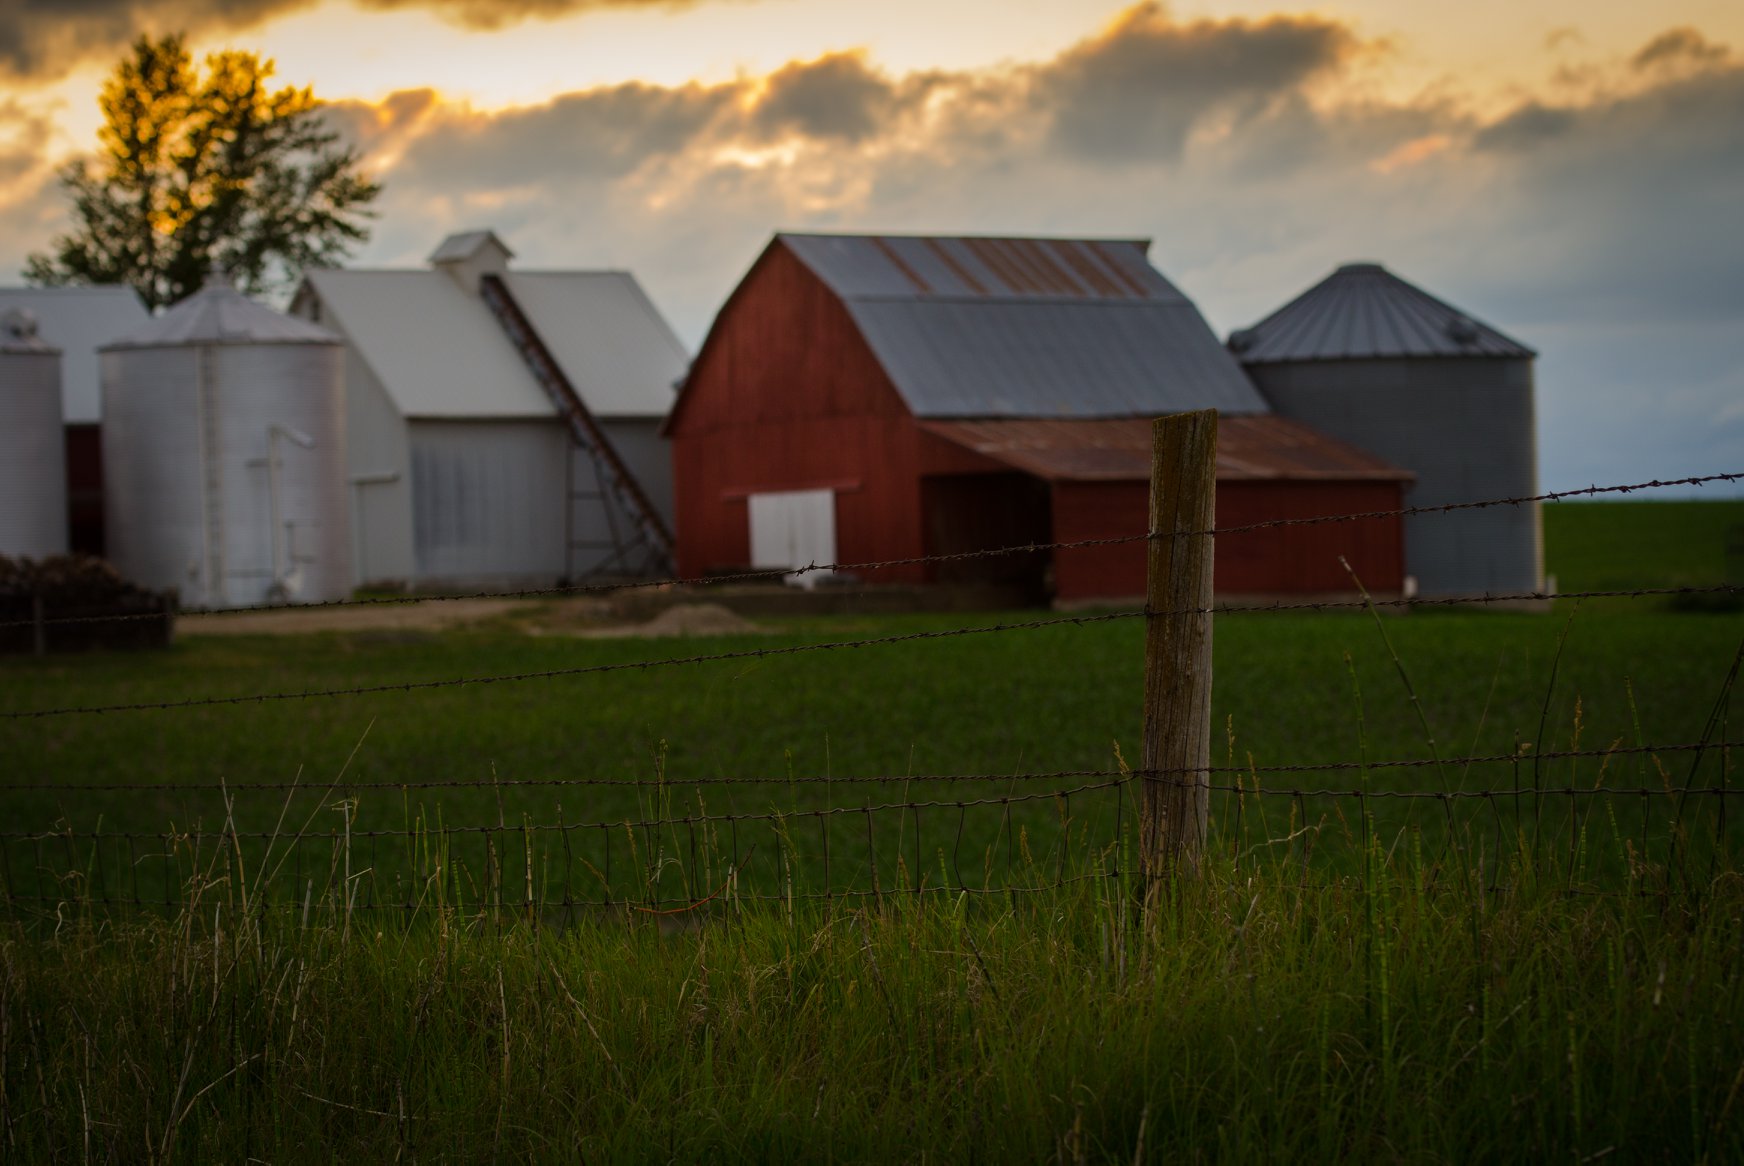 Farmstead with a sunset.